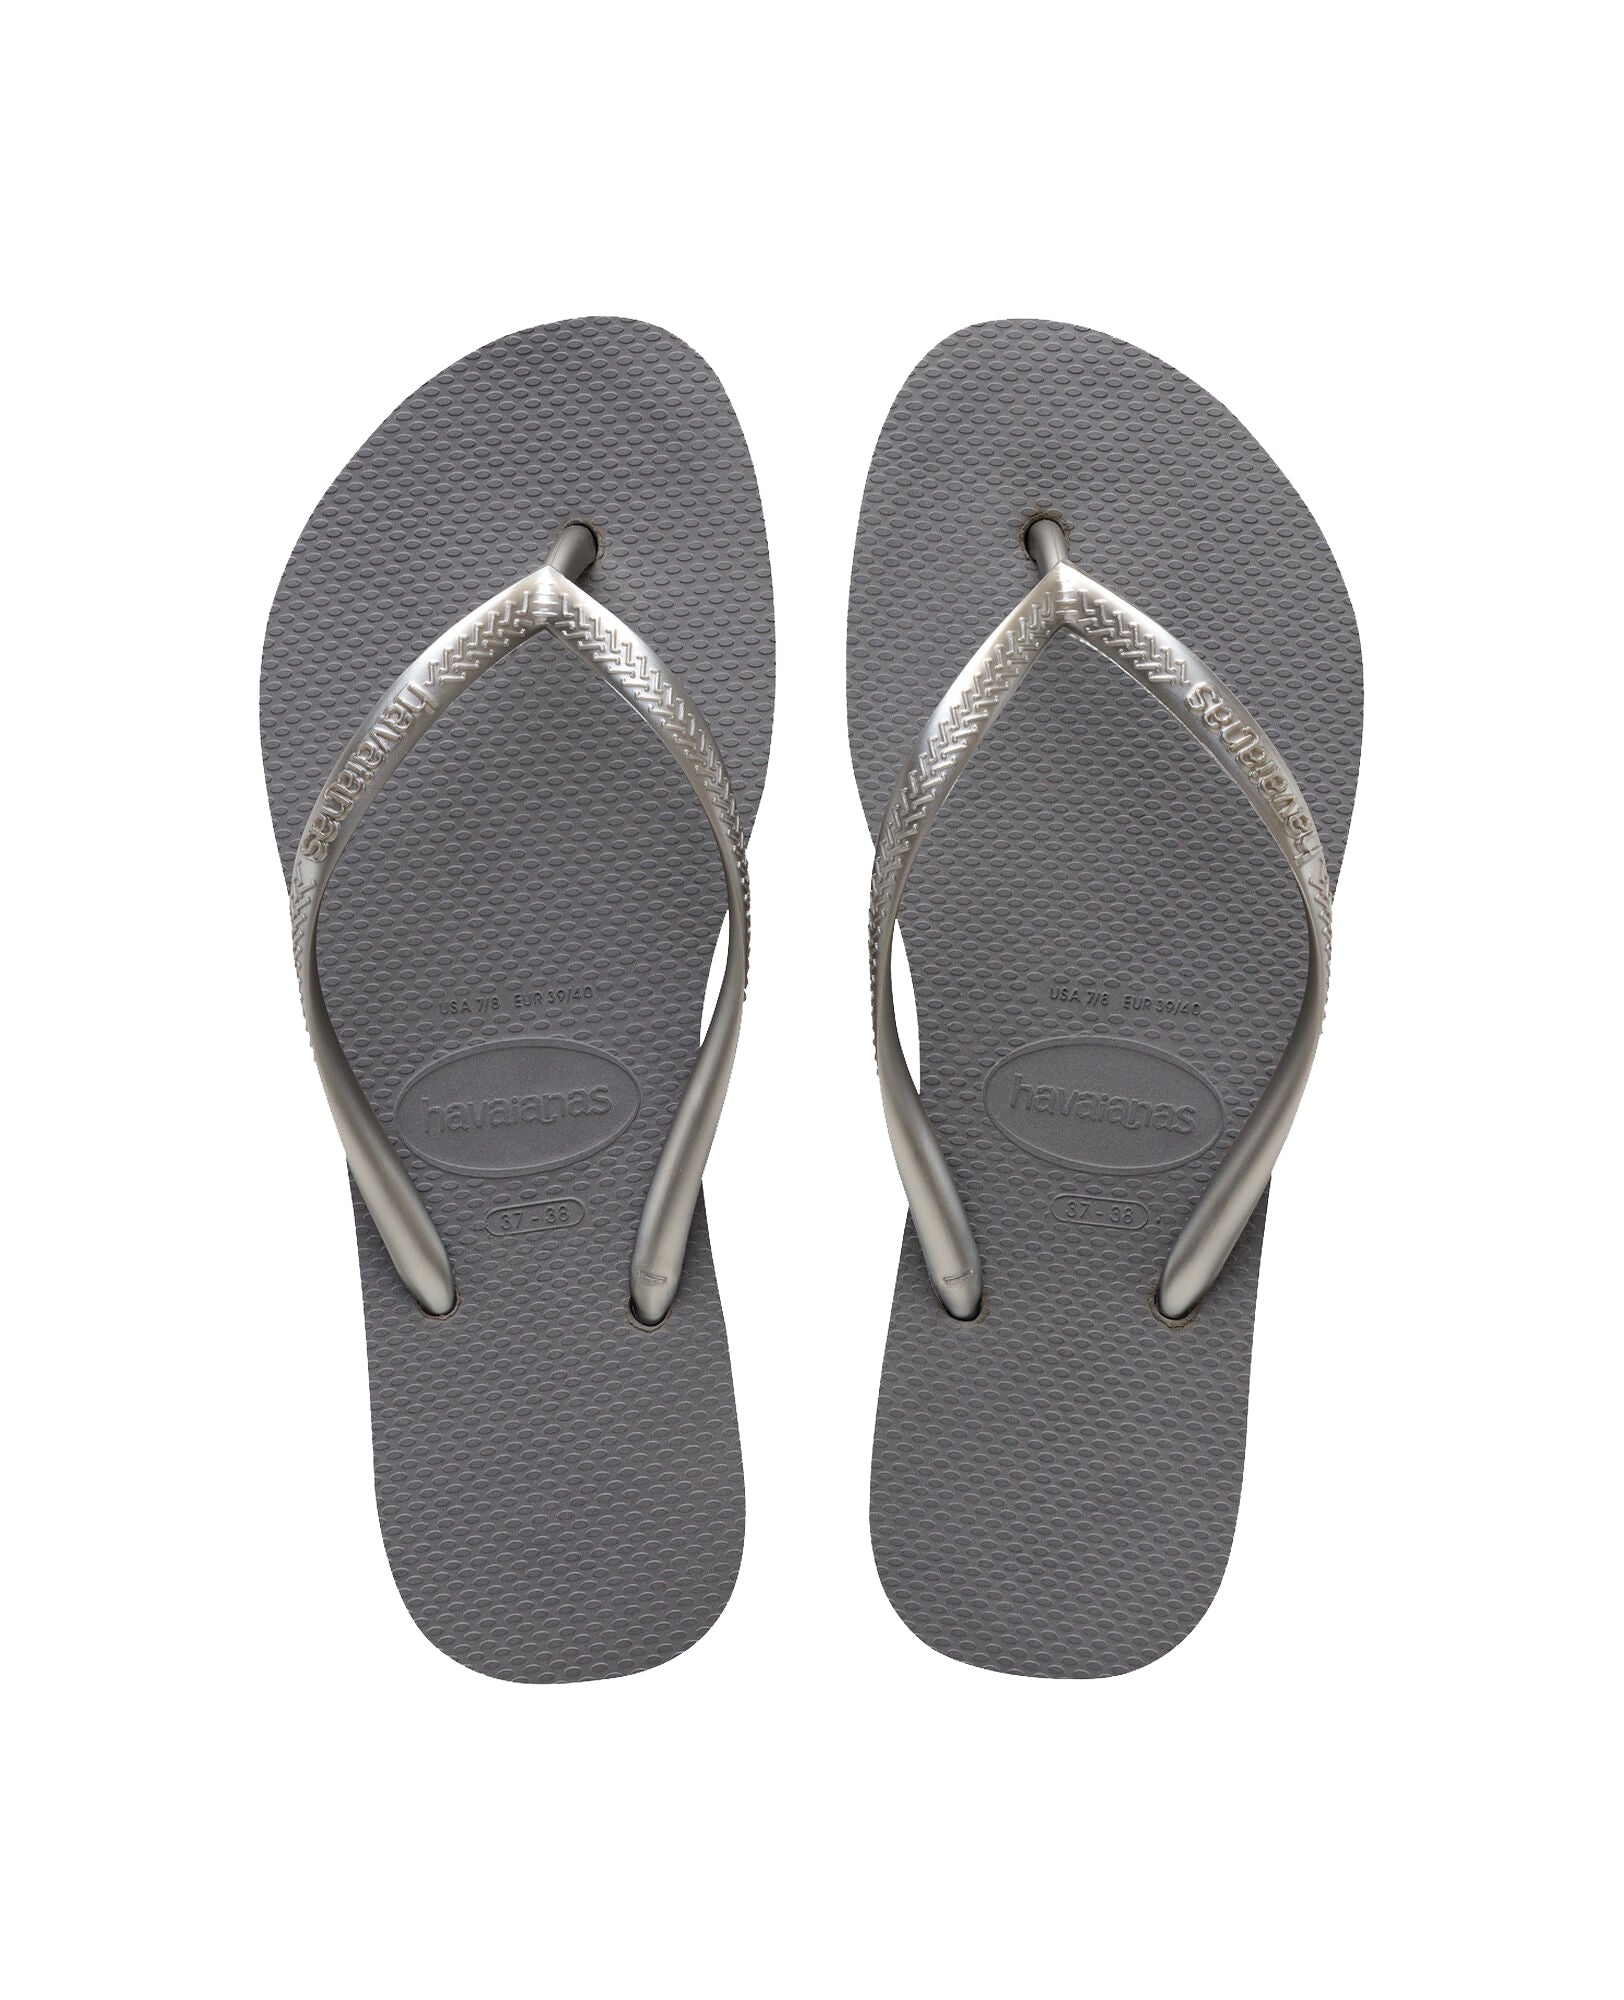 Havaianas Slim Flatform Womens Sandal 5178-Steel Grey 9